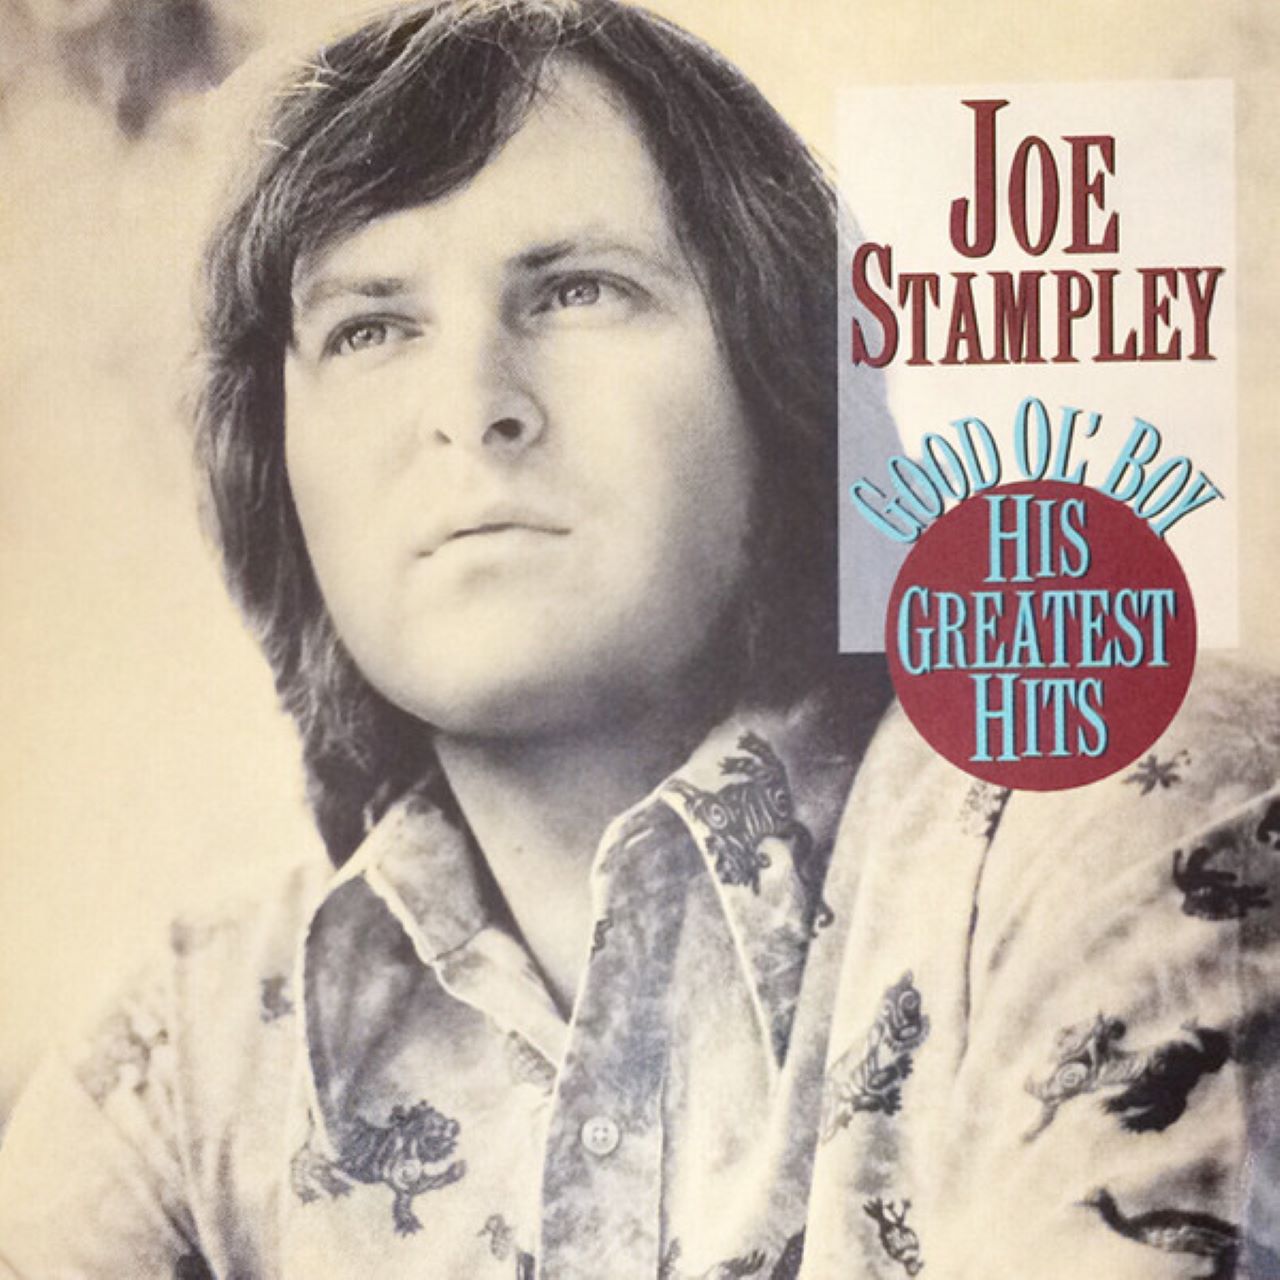 Joe Stampley - Good Ol' Boy, His Greatest Hits cover album